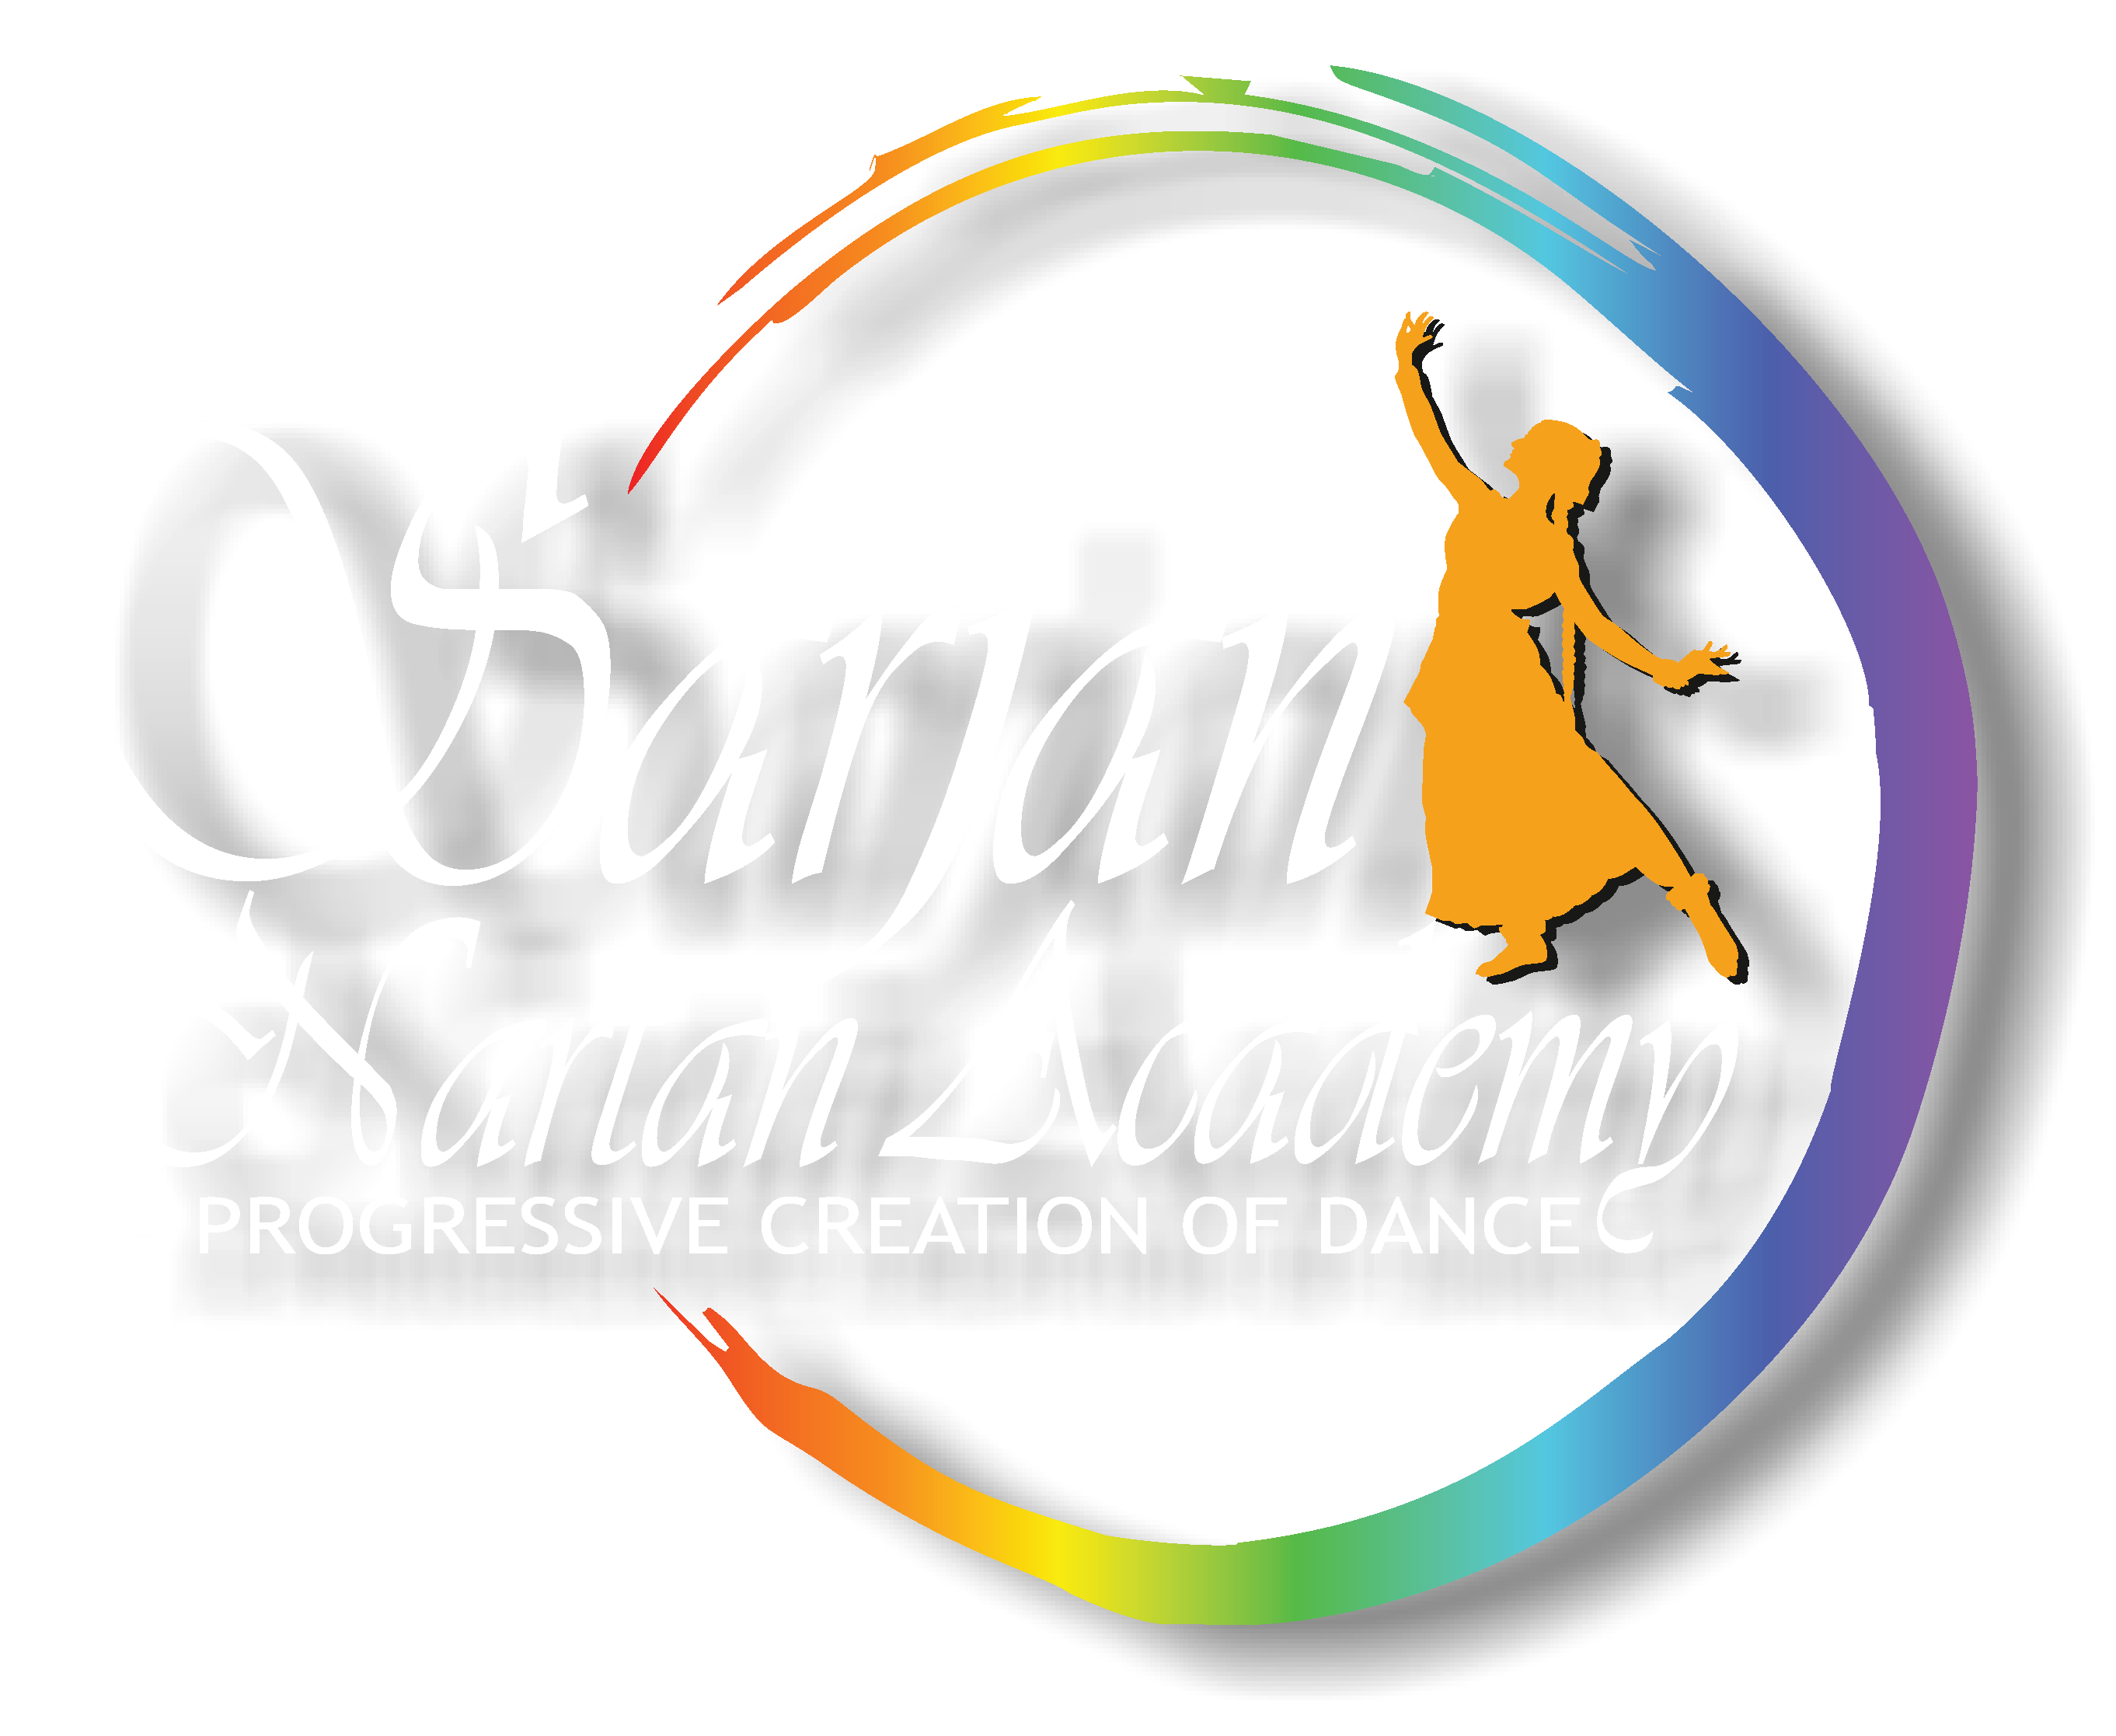 Sarjan Nartan Academy